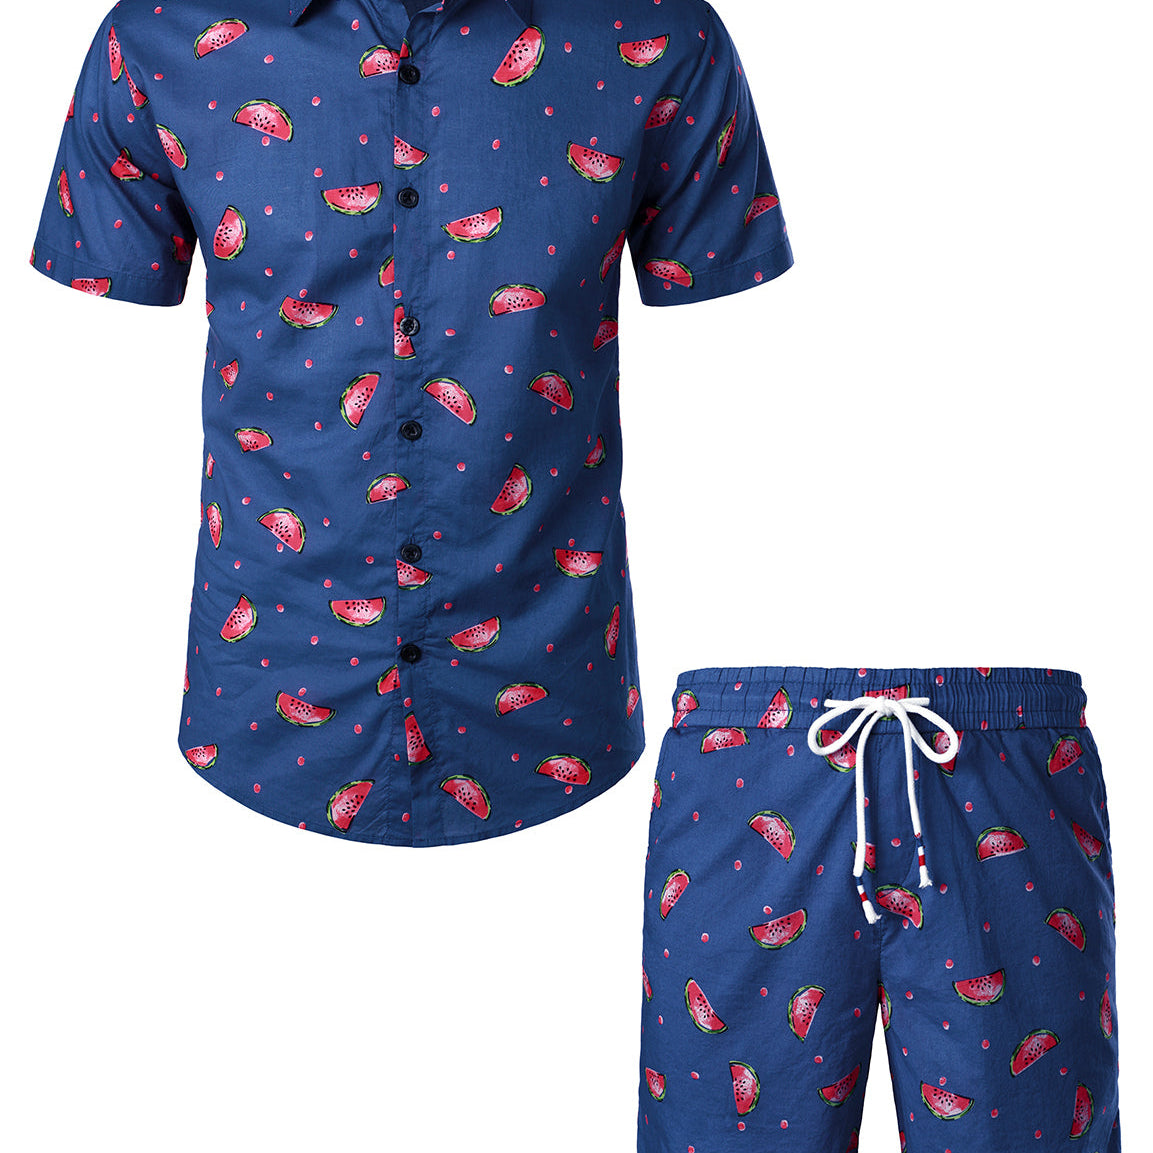 Men's Lemon Print Cotton Hawaiian Shirt and Shorts Set